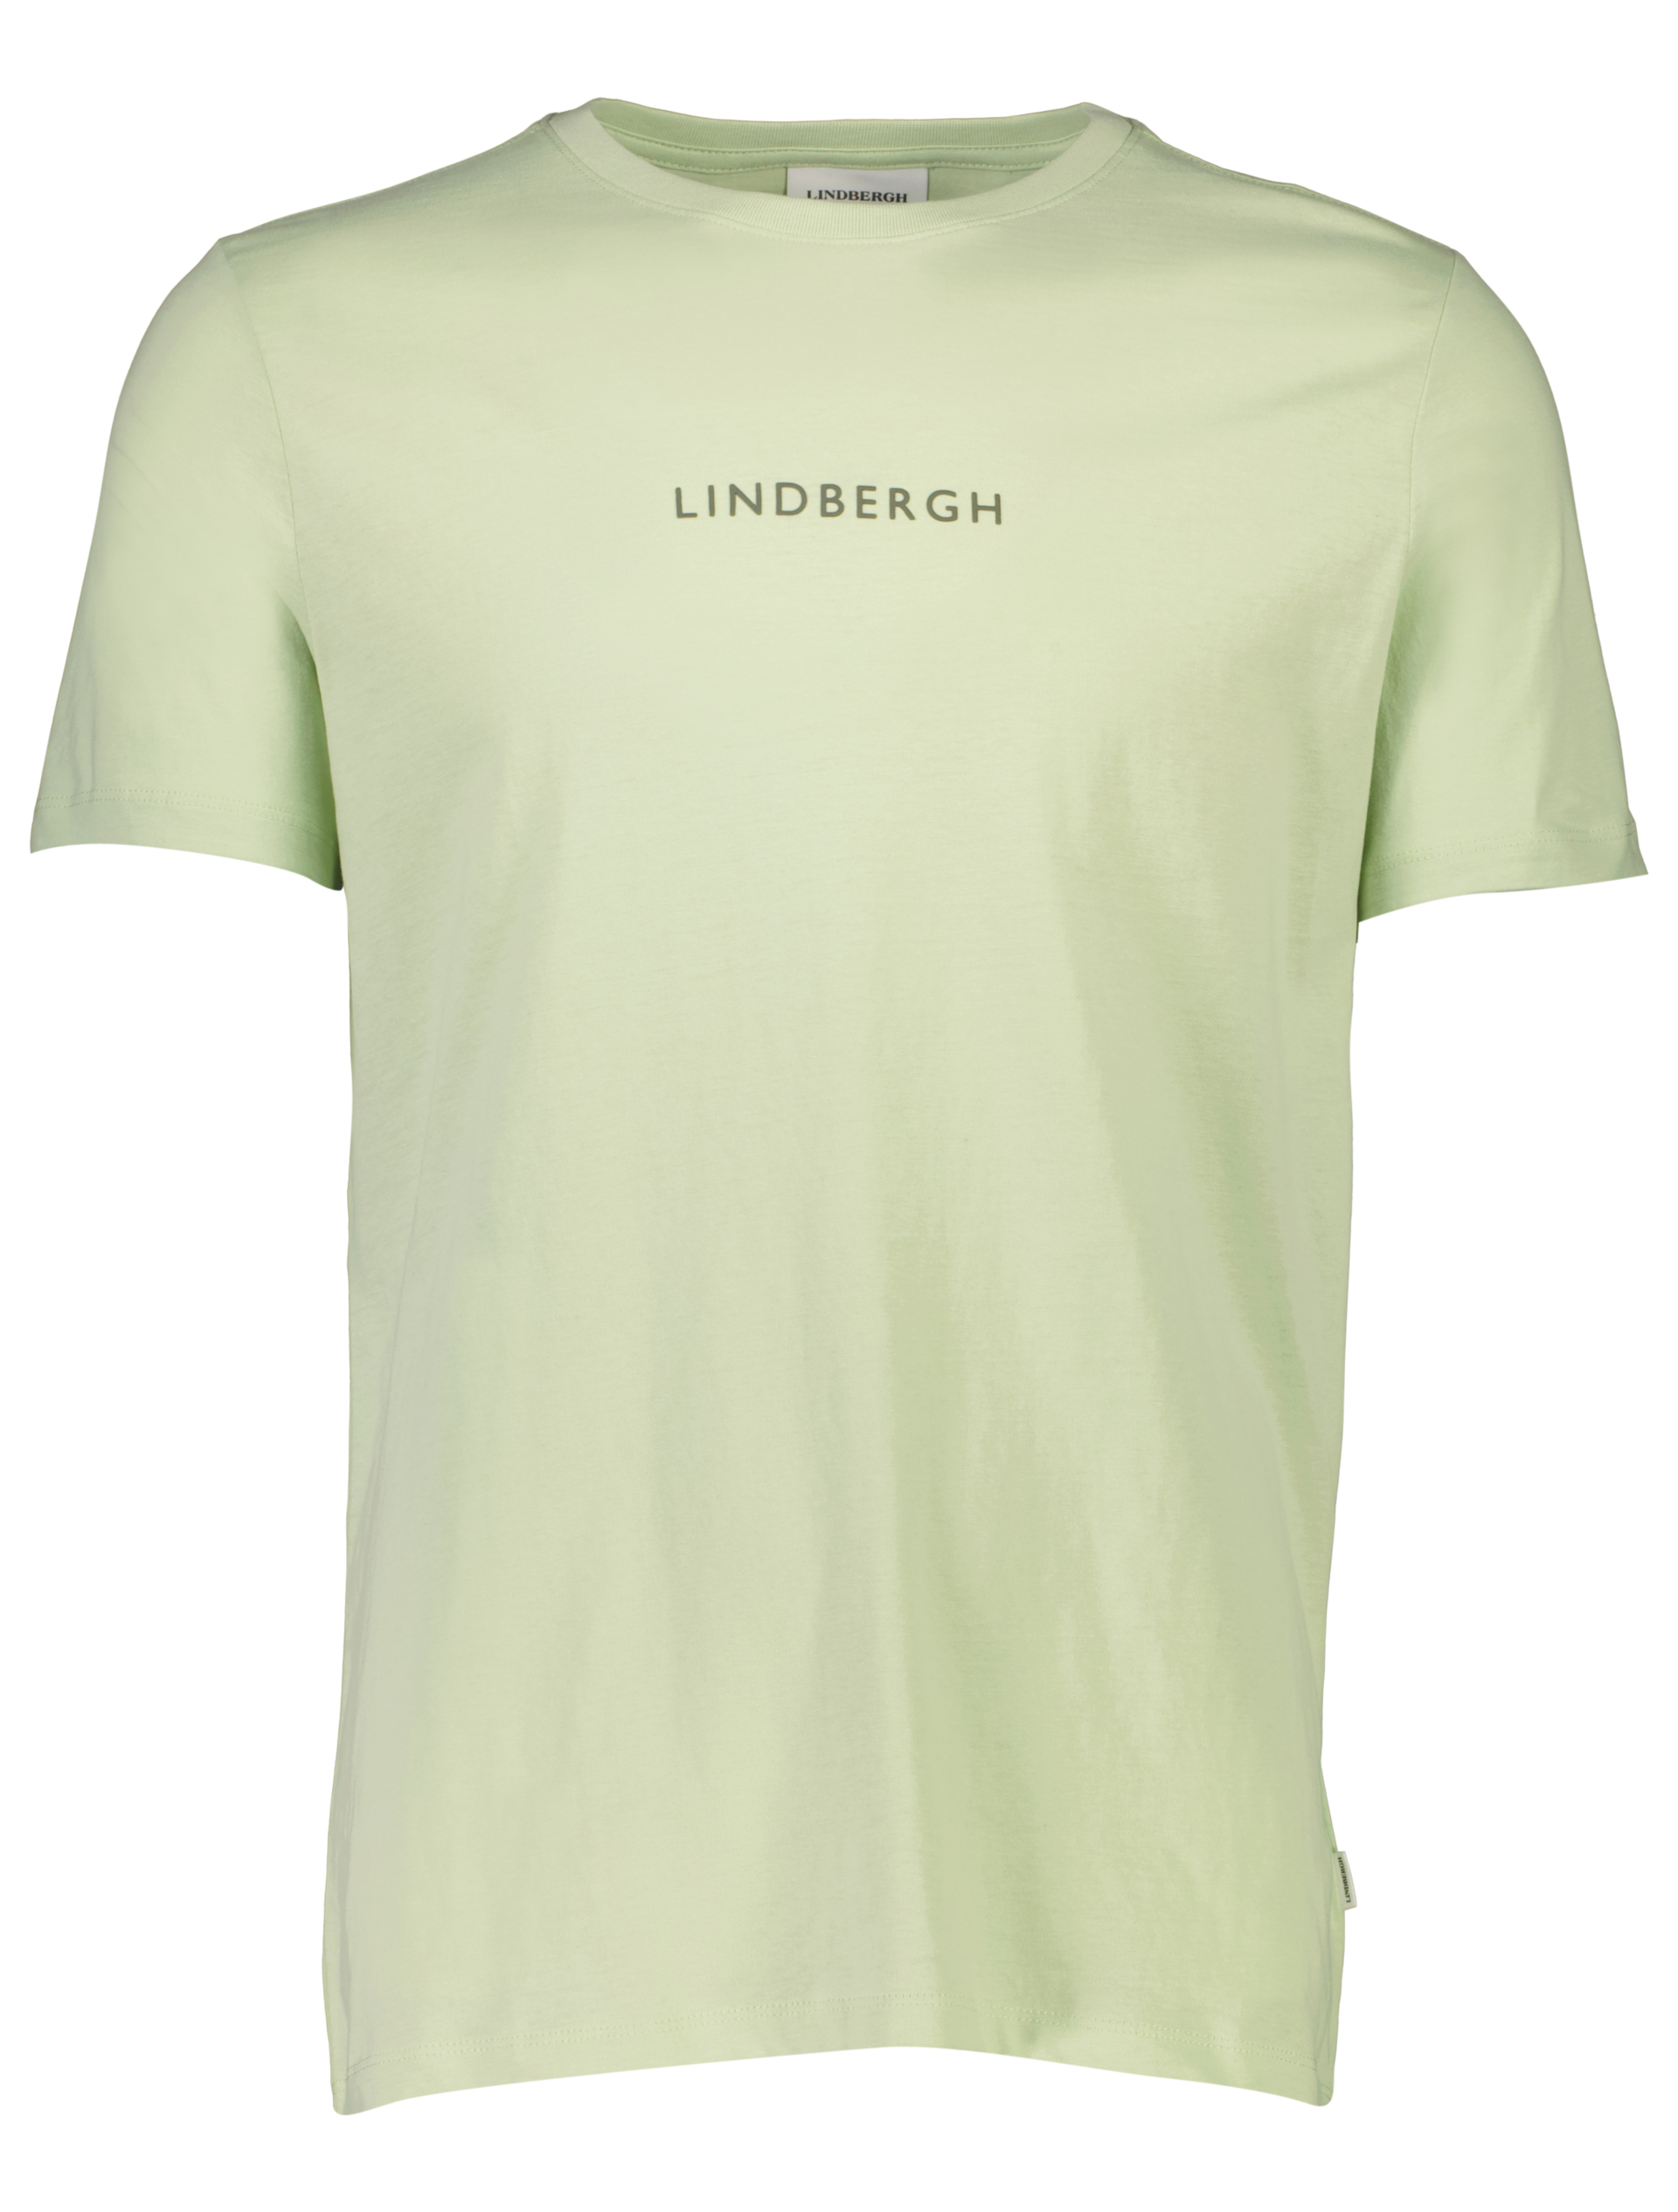 Lindbergh T-shirt grön / mint